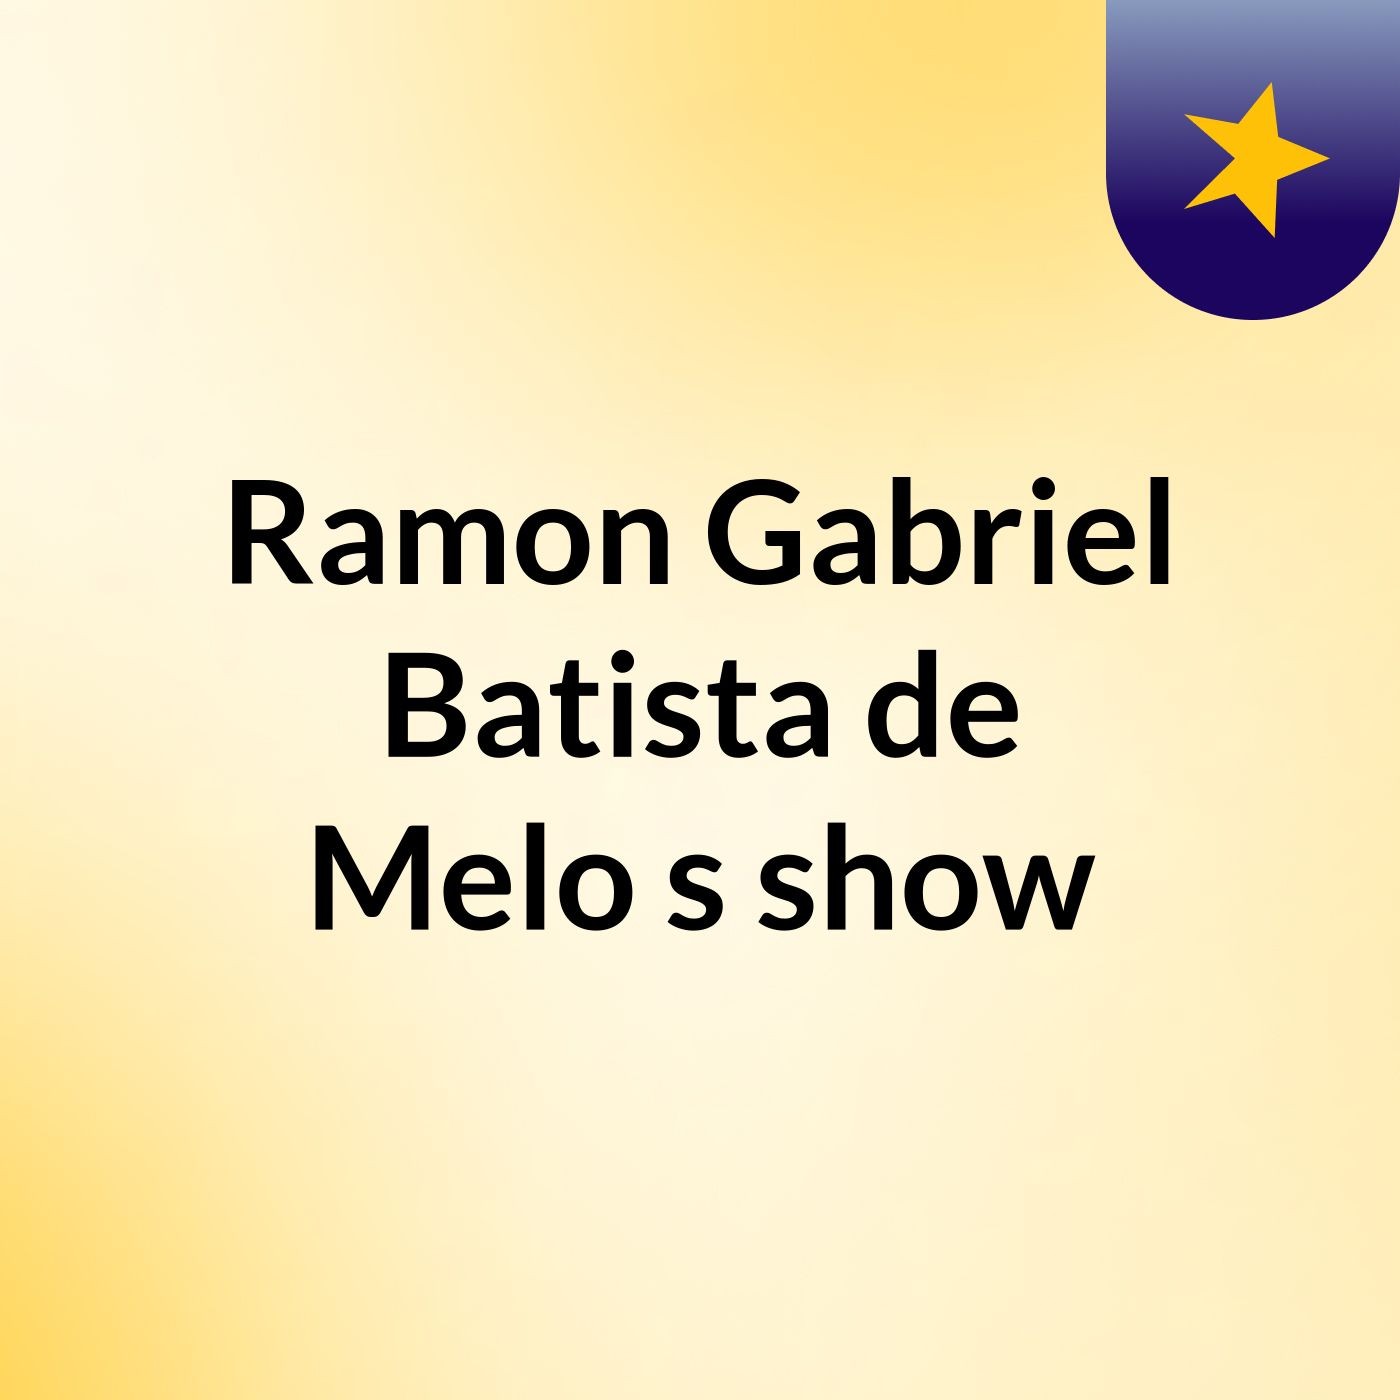 Ramon Gabriel Batista de Melo's show